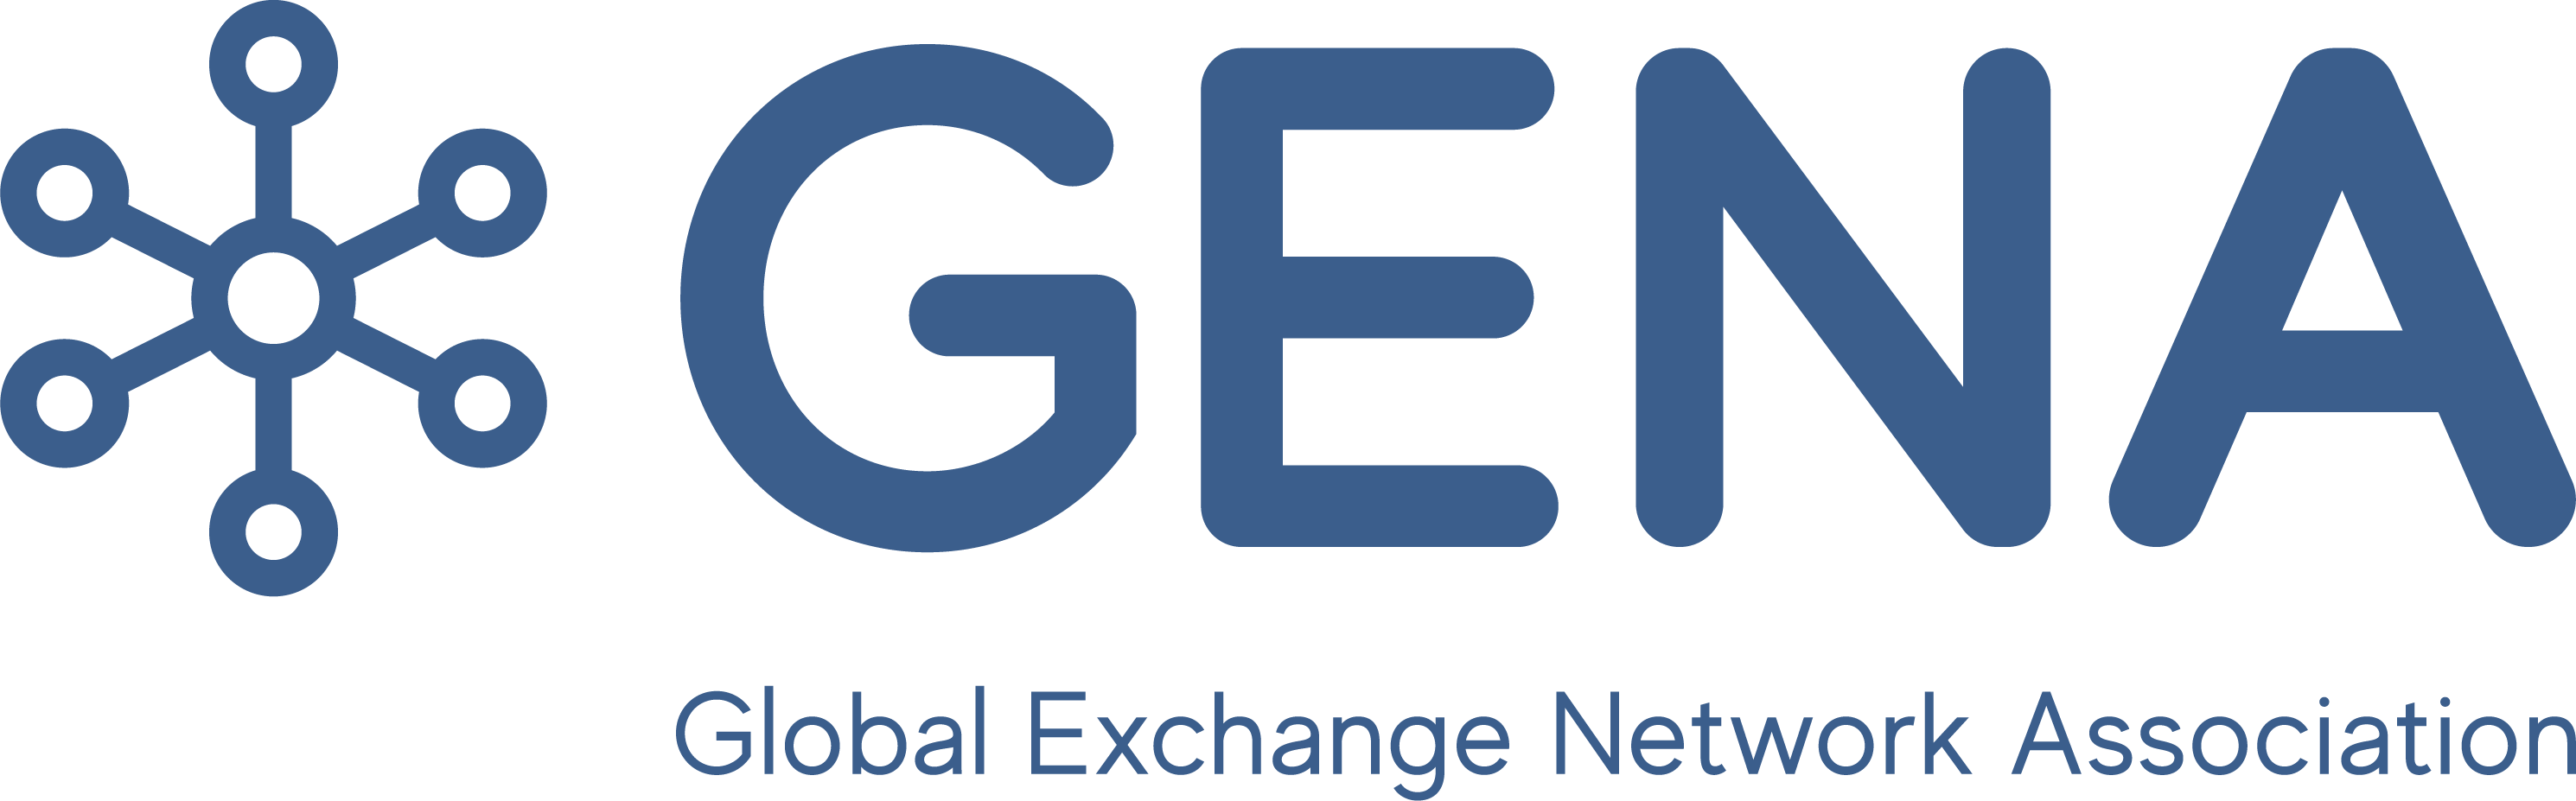 Gena logo